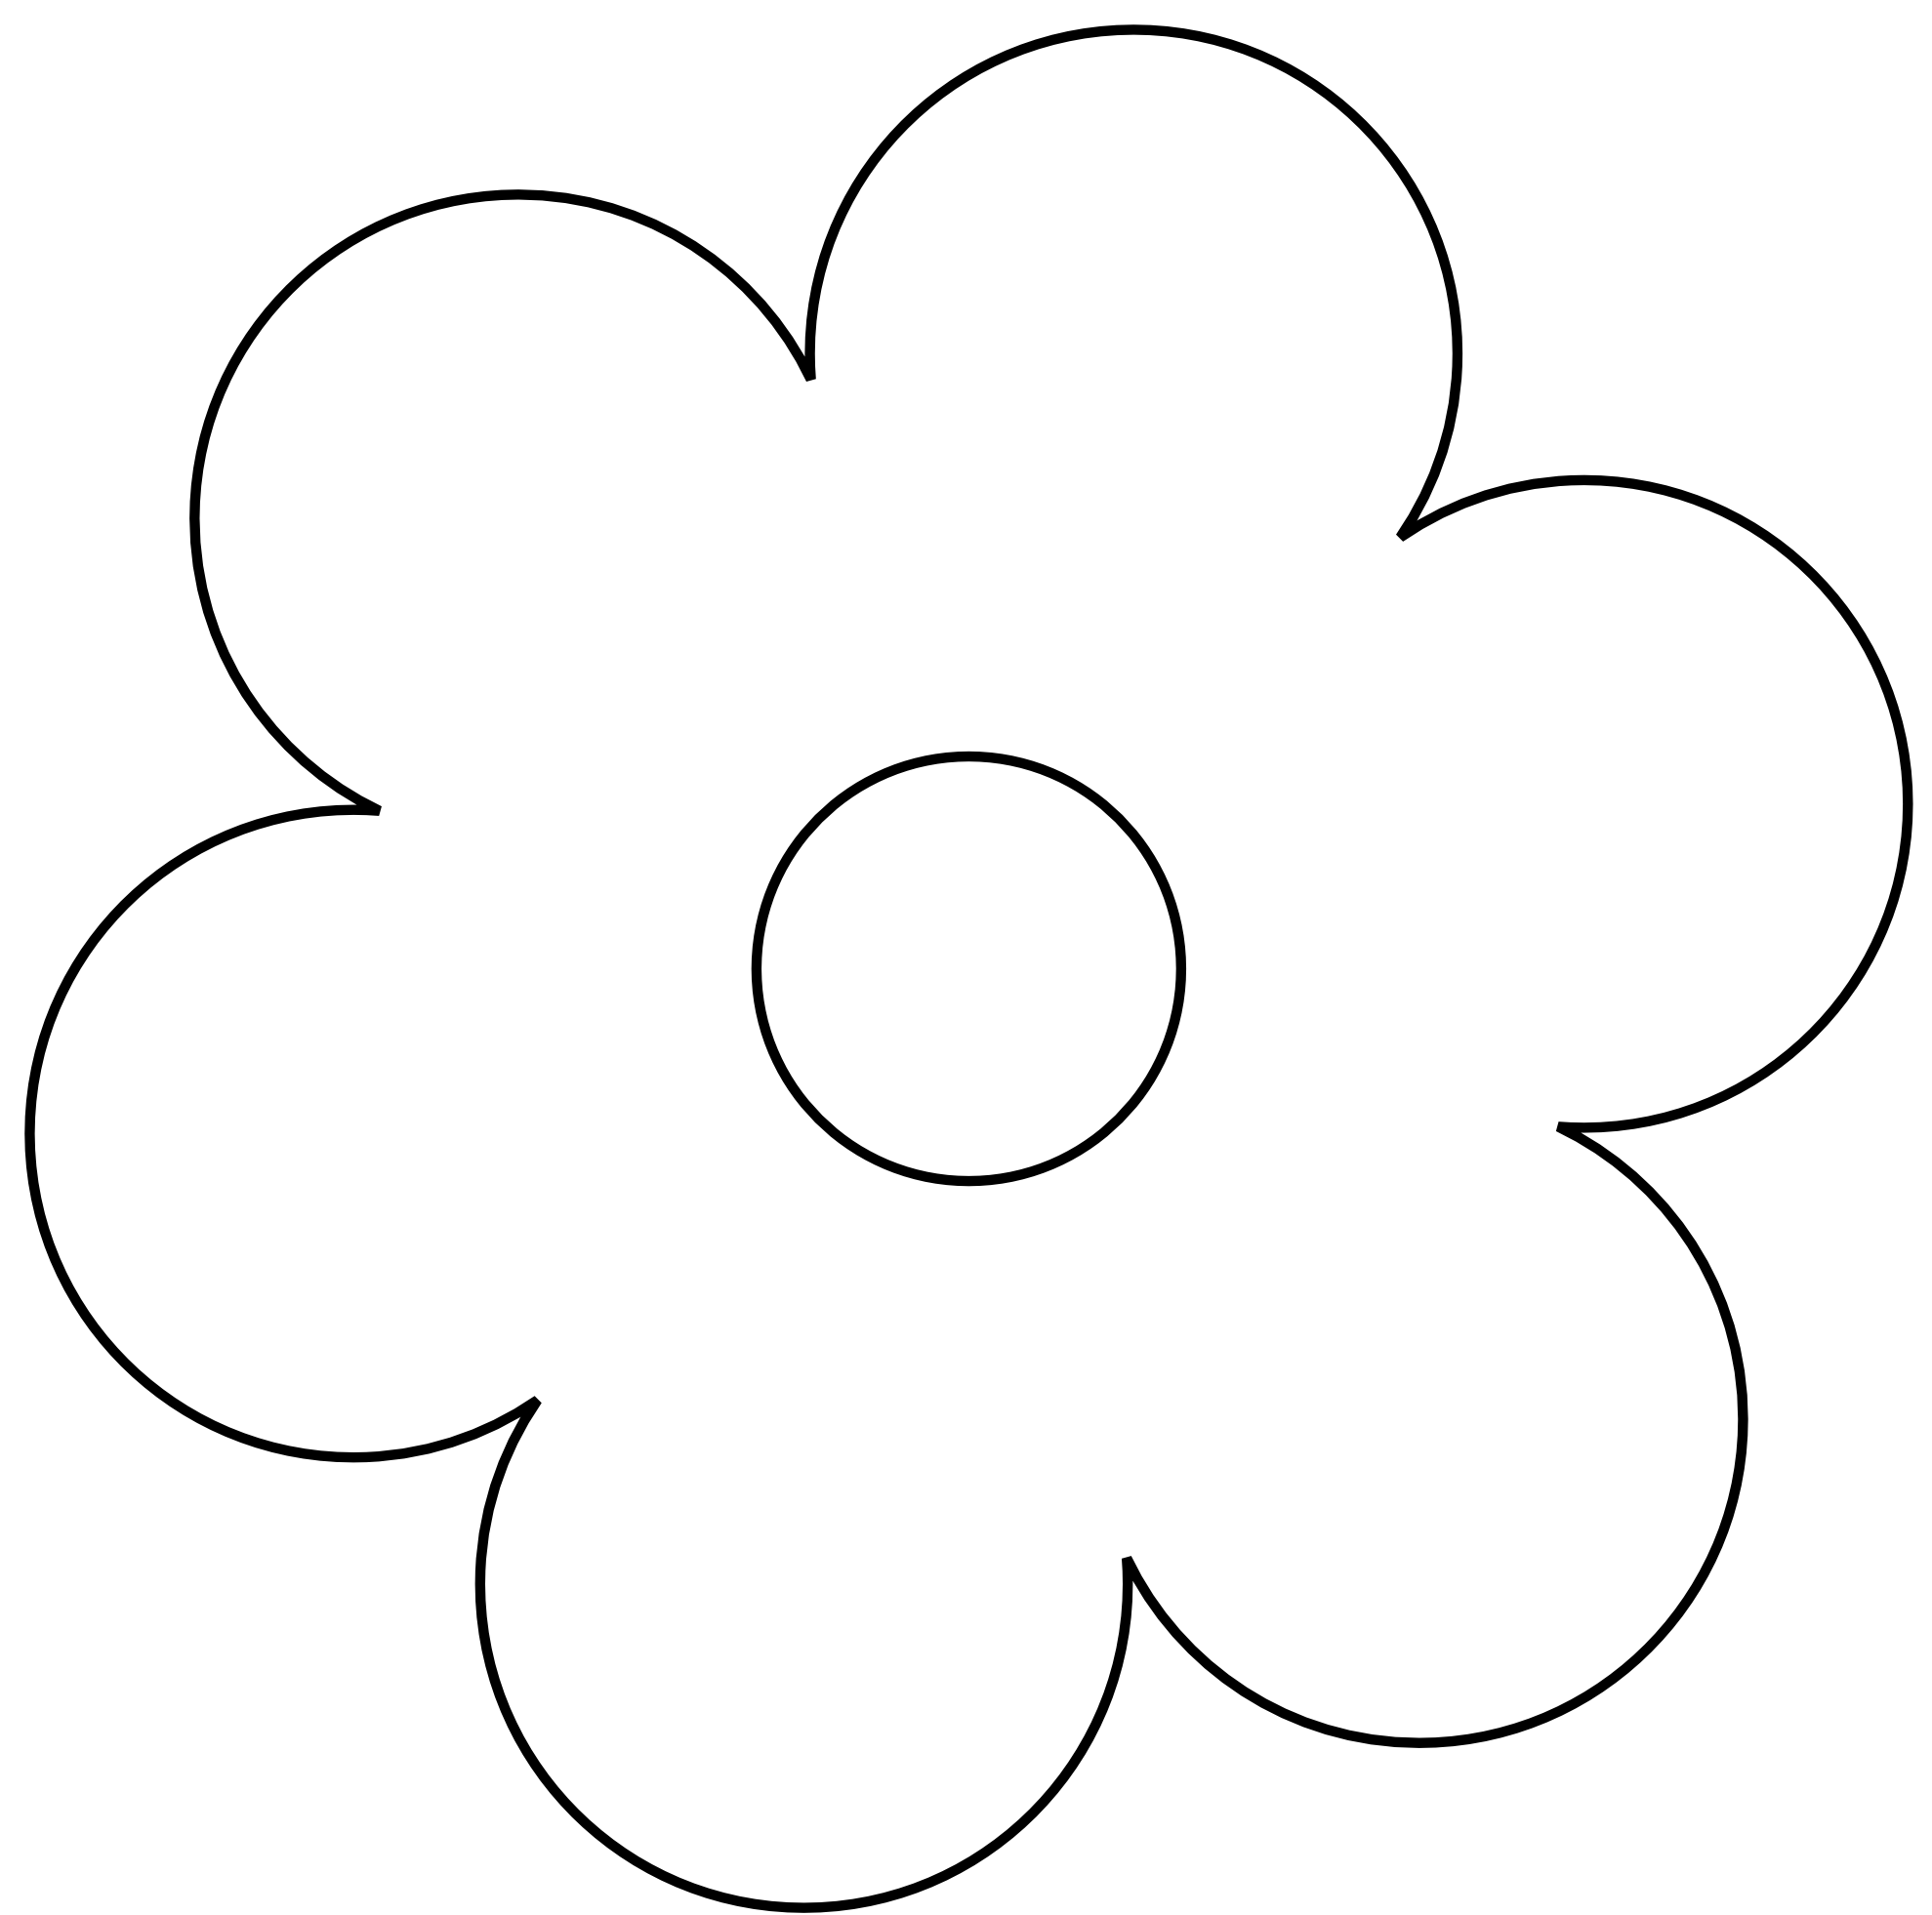 Flower black and white black and white flower clipart clipart